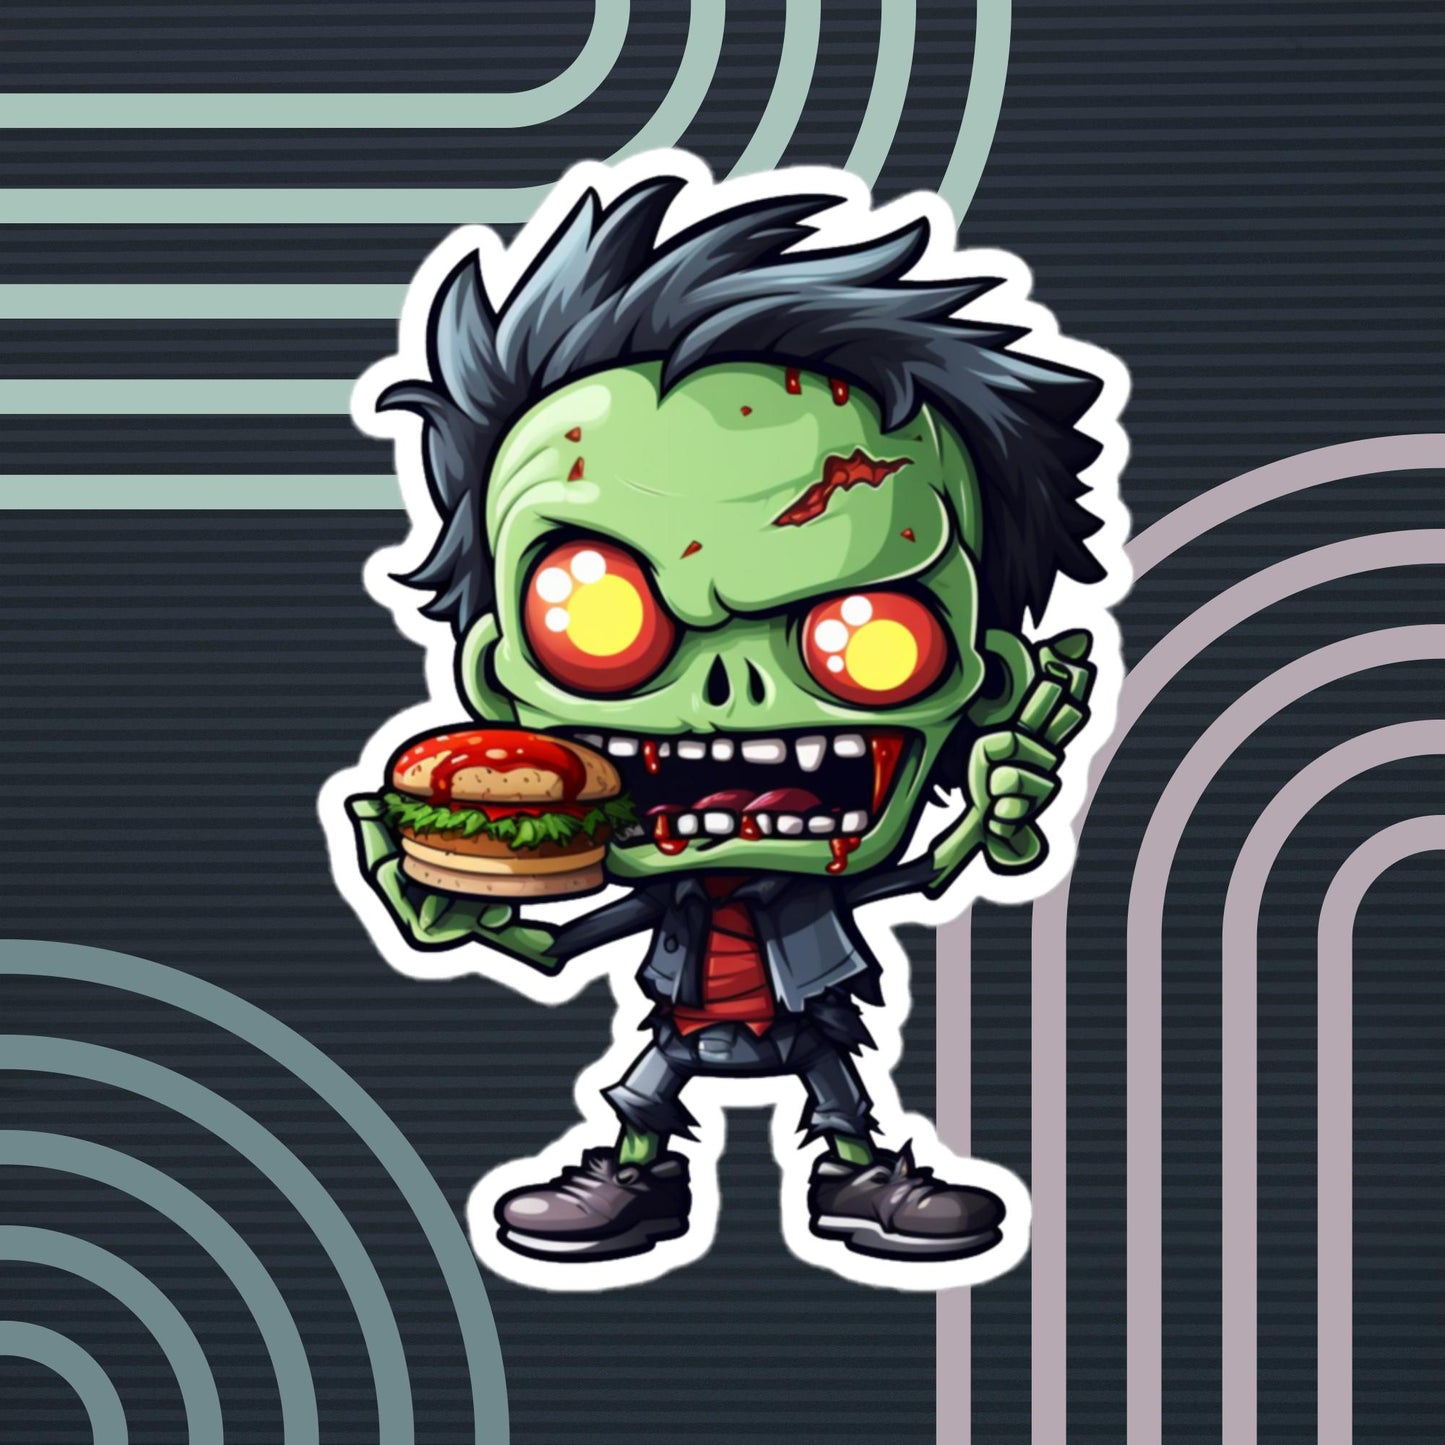 Super Cute Zombie Eating a Cheeseburger